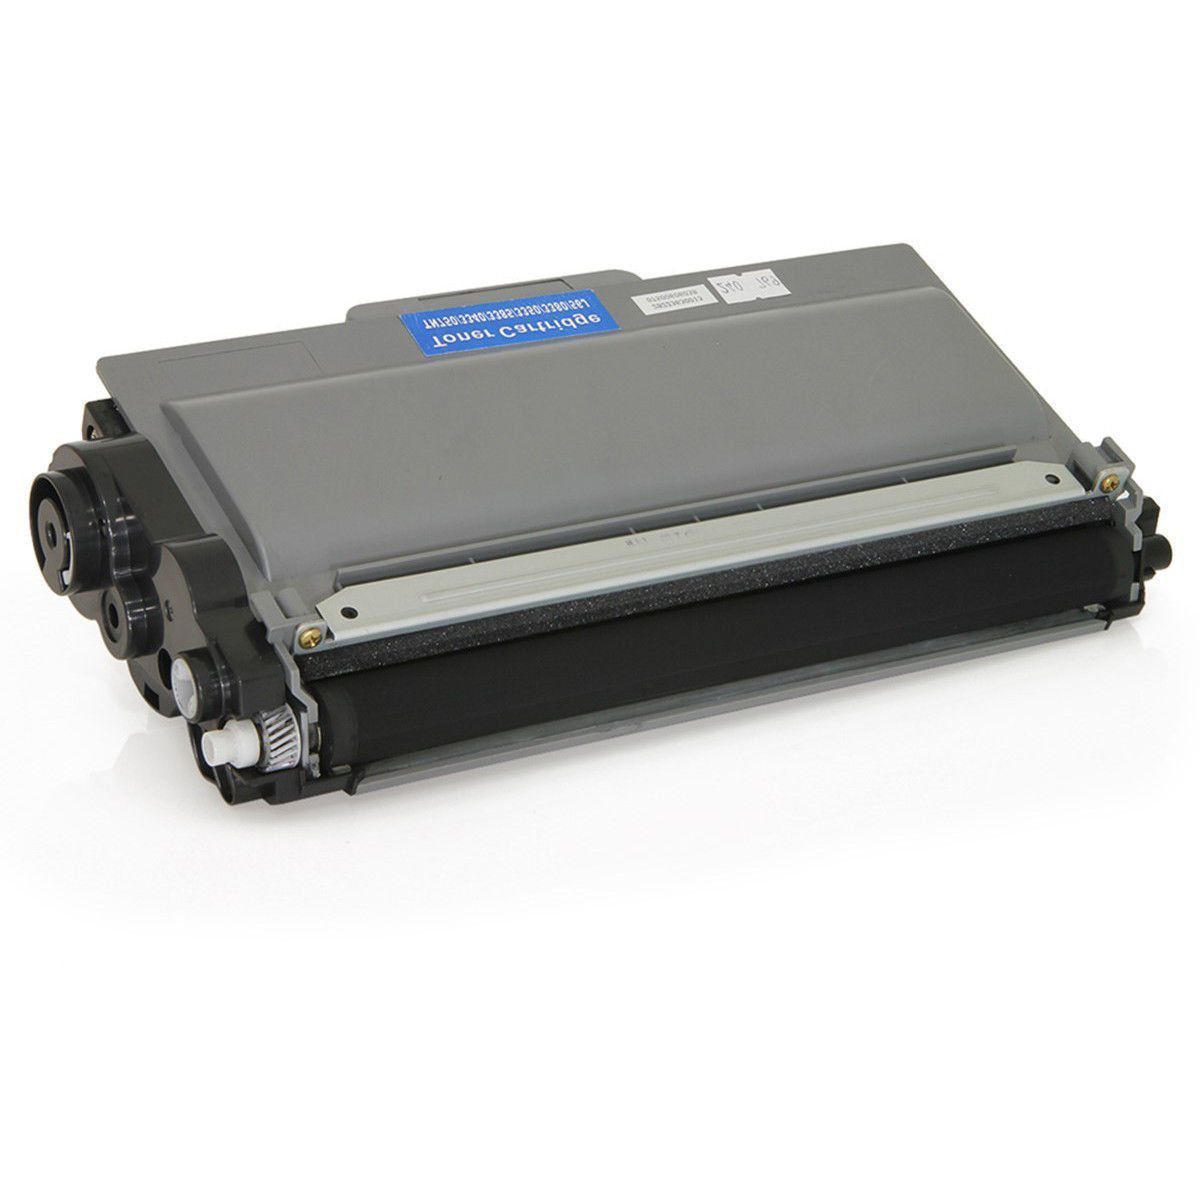 Toner Compatível com Impressora Brother DCP-8157dn DCP-8157 DCP8157dn DCP8157 Preto 12.000